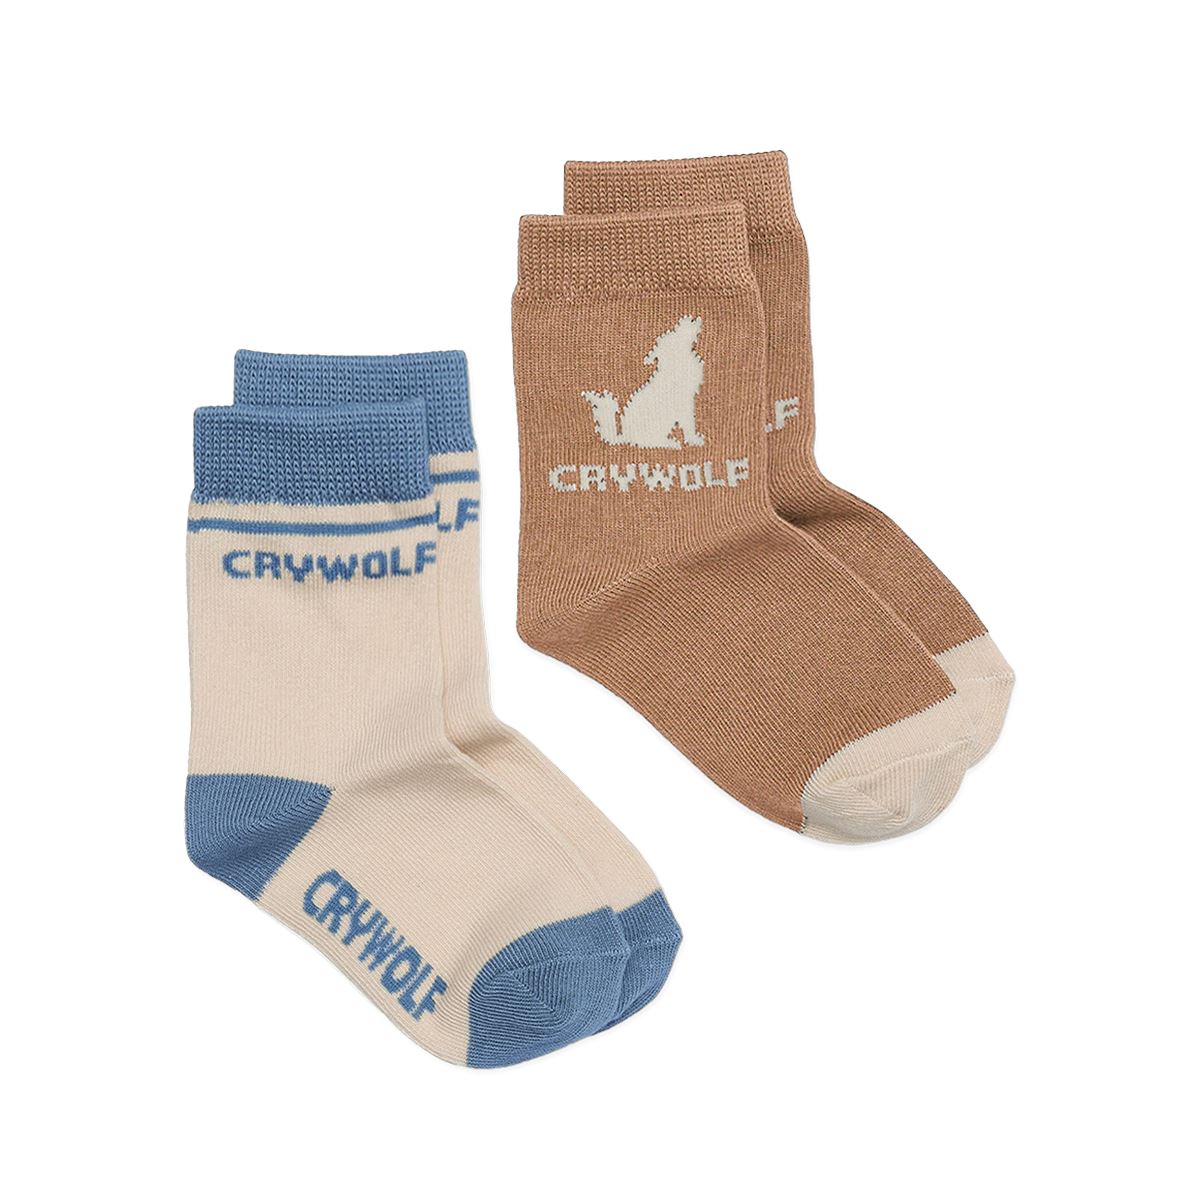 Crywolf Sock 2-Pack - Tan/Southern Blue Socks Crywolf 